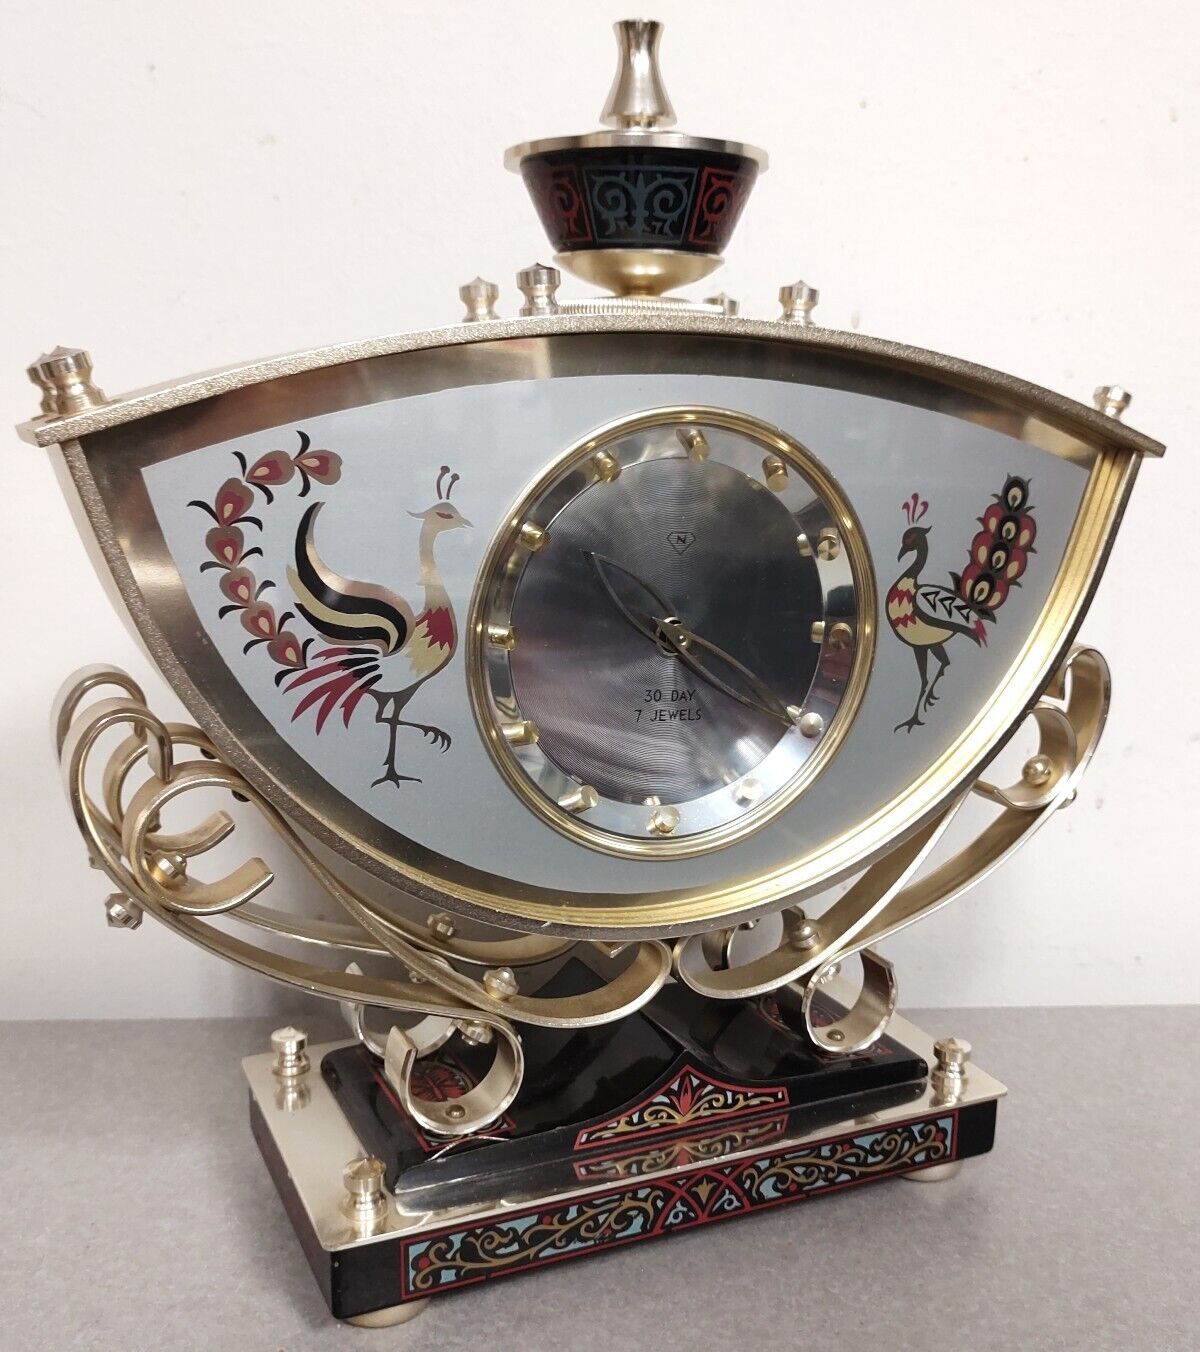 Vintage Japanese 30 Day 7 Jewel Retro Ornate Mantle Clock circa 1960s